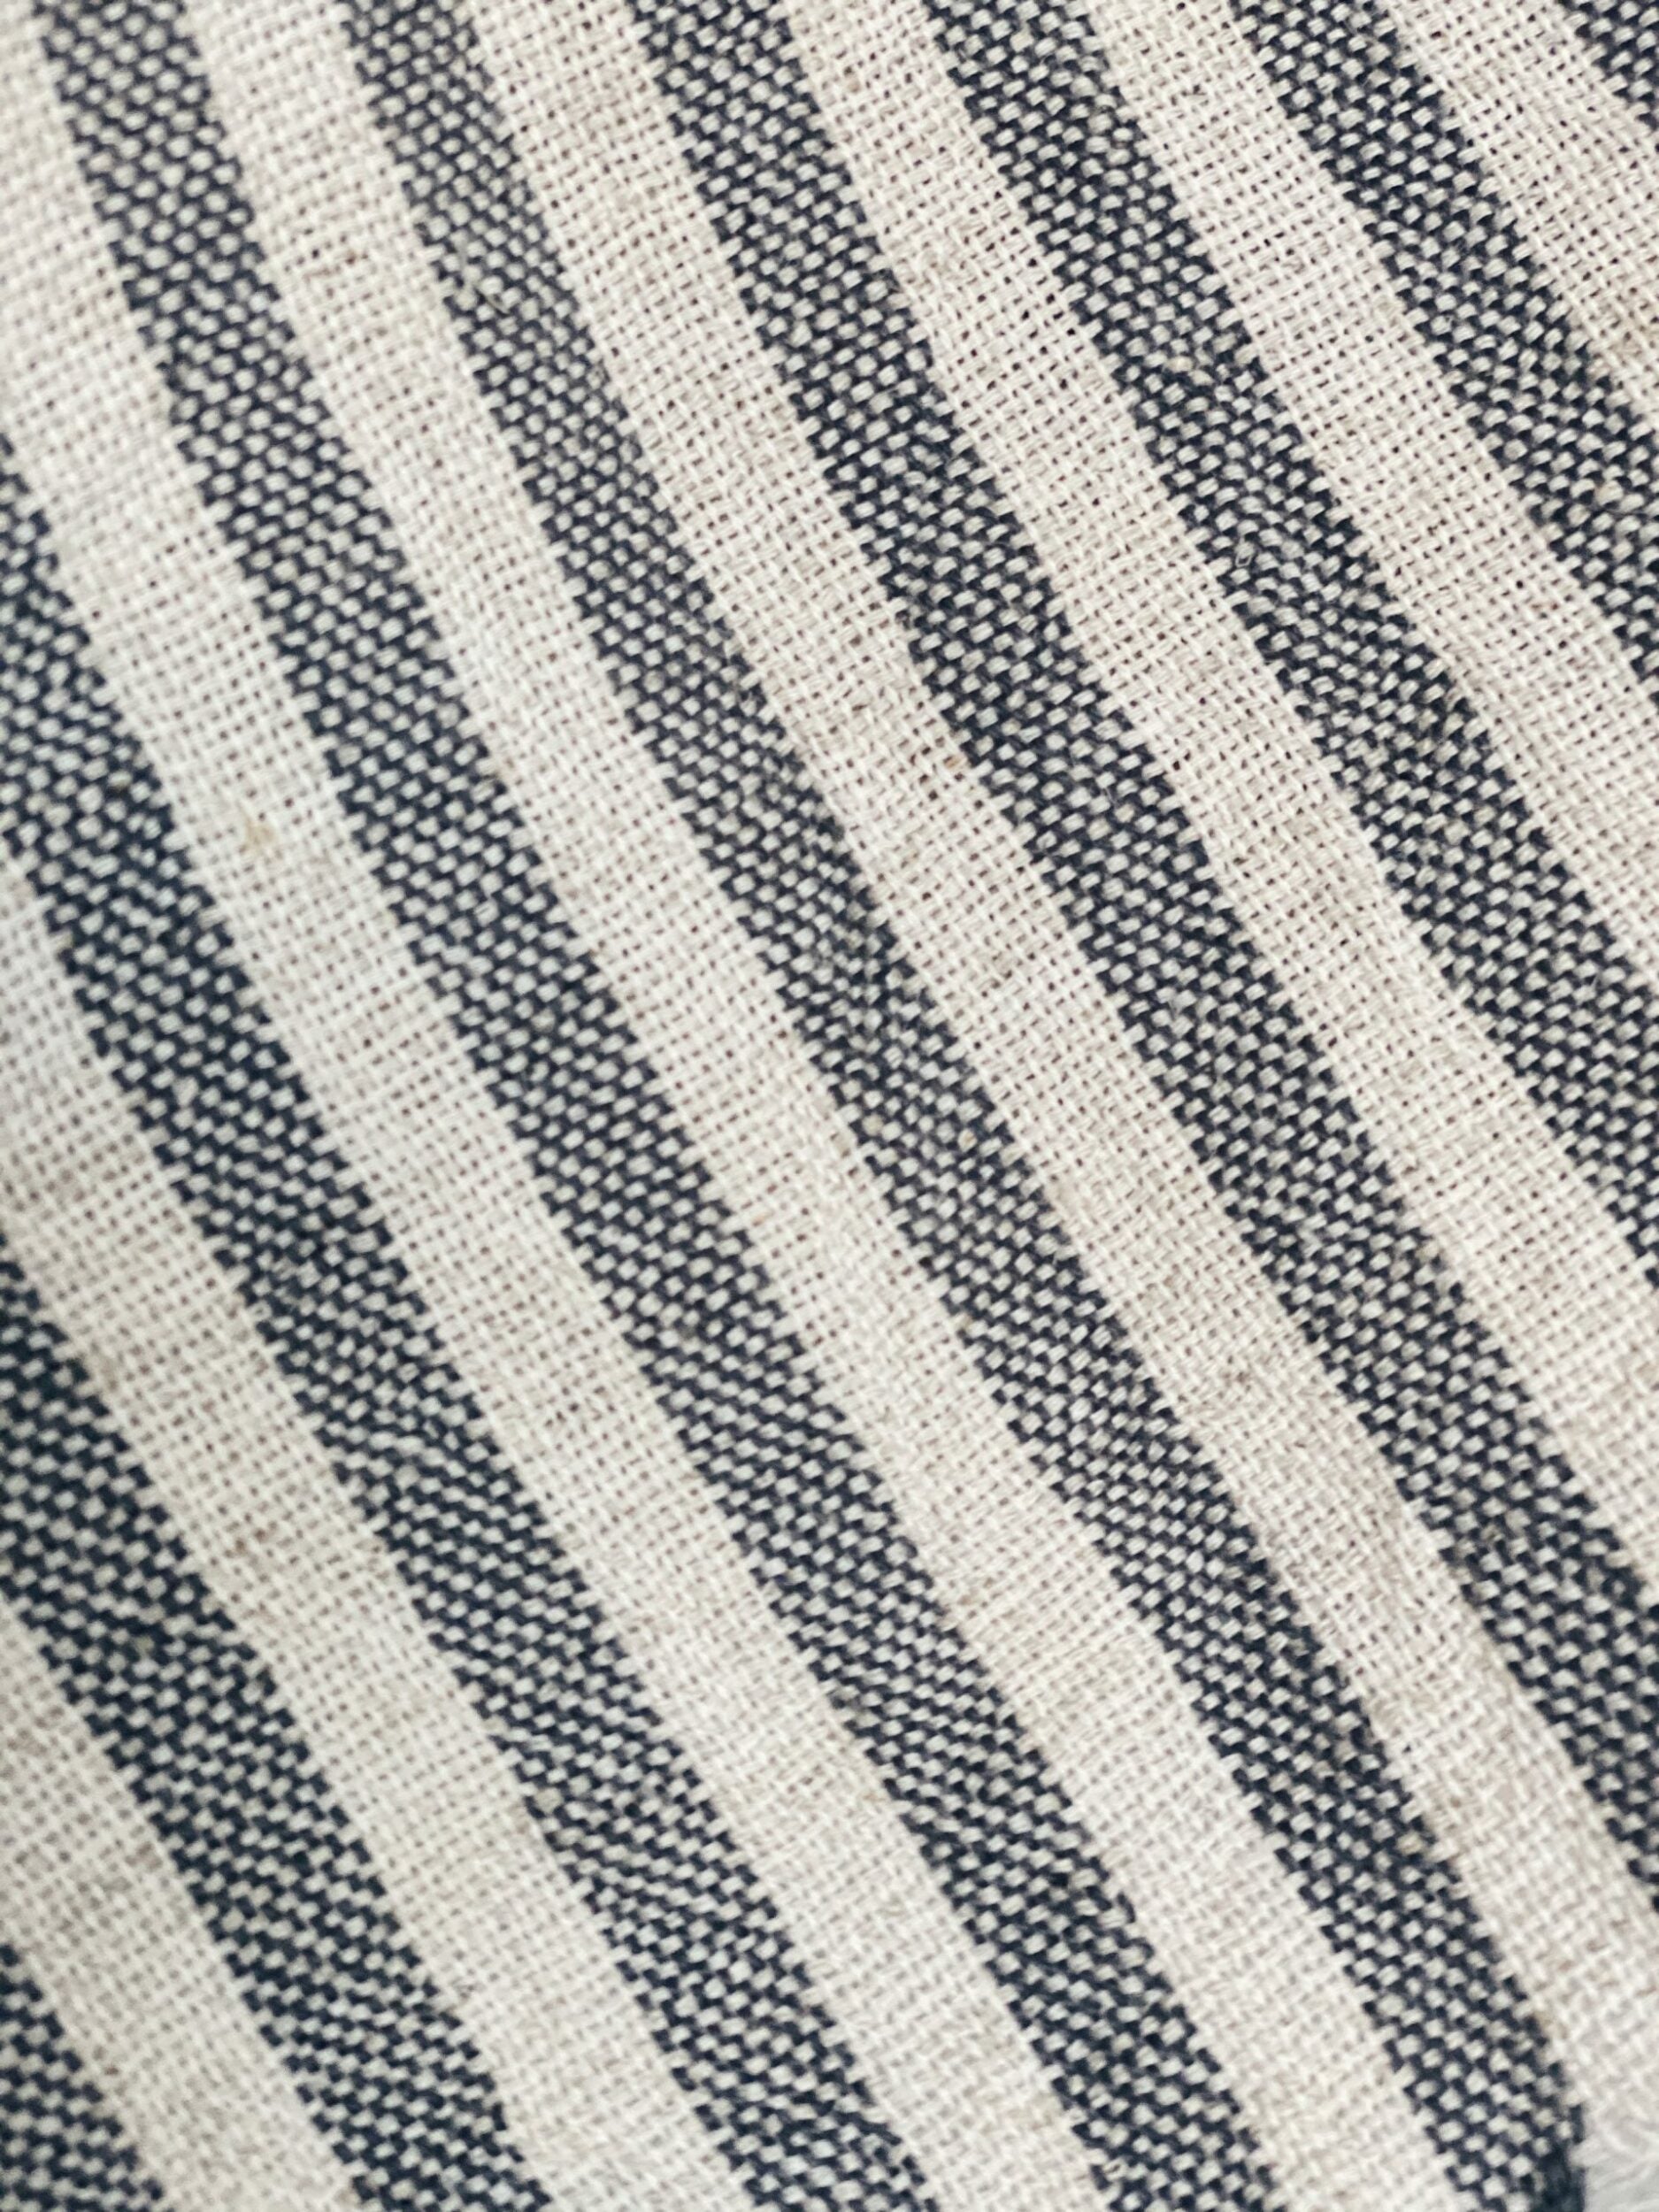 Grey Striped Linen Turkish Towel